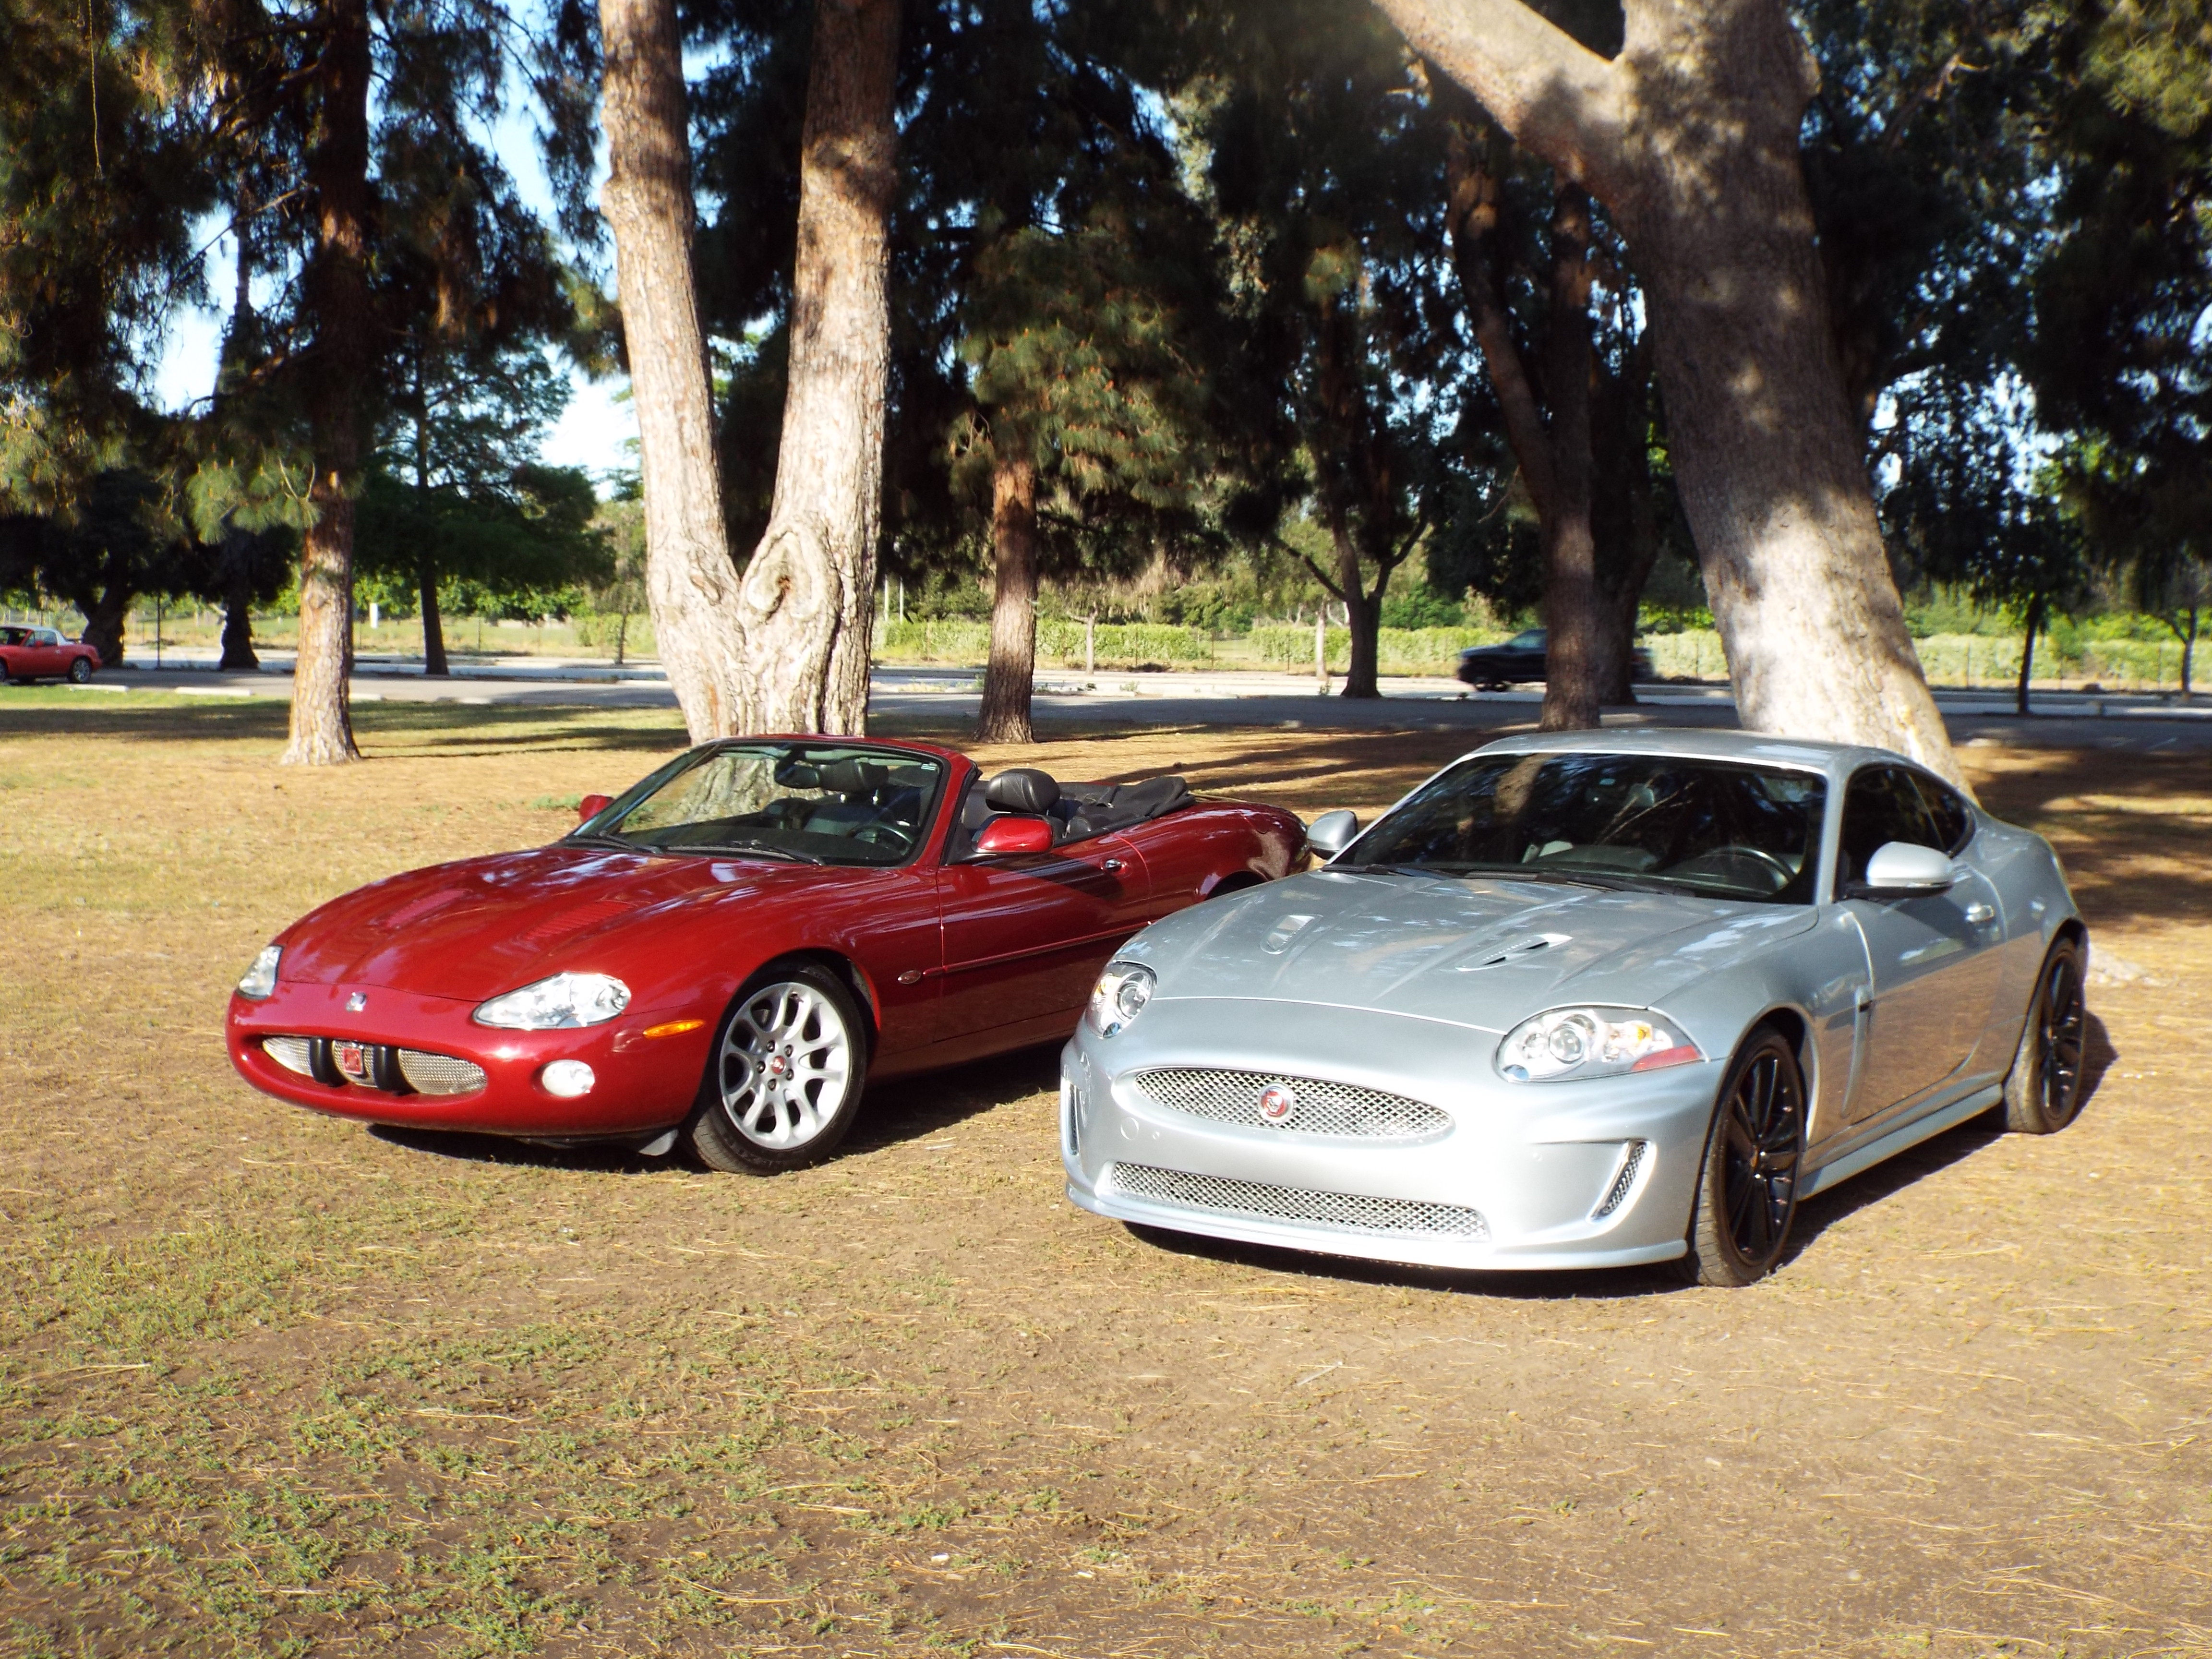 How many show their cars and - Jaguar Forums - Jaguar Enthusiasts Forum